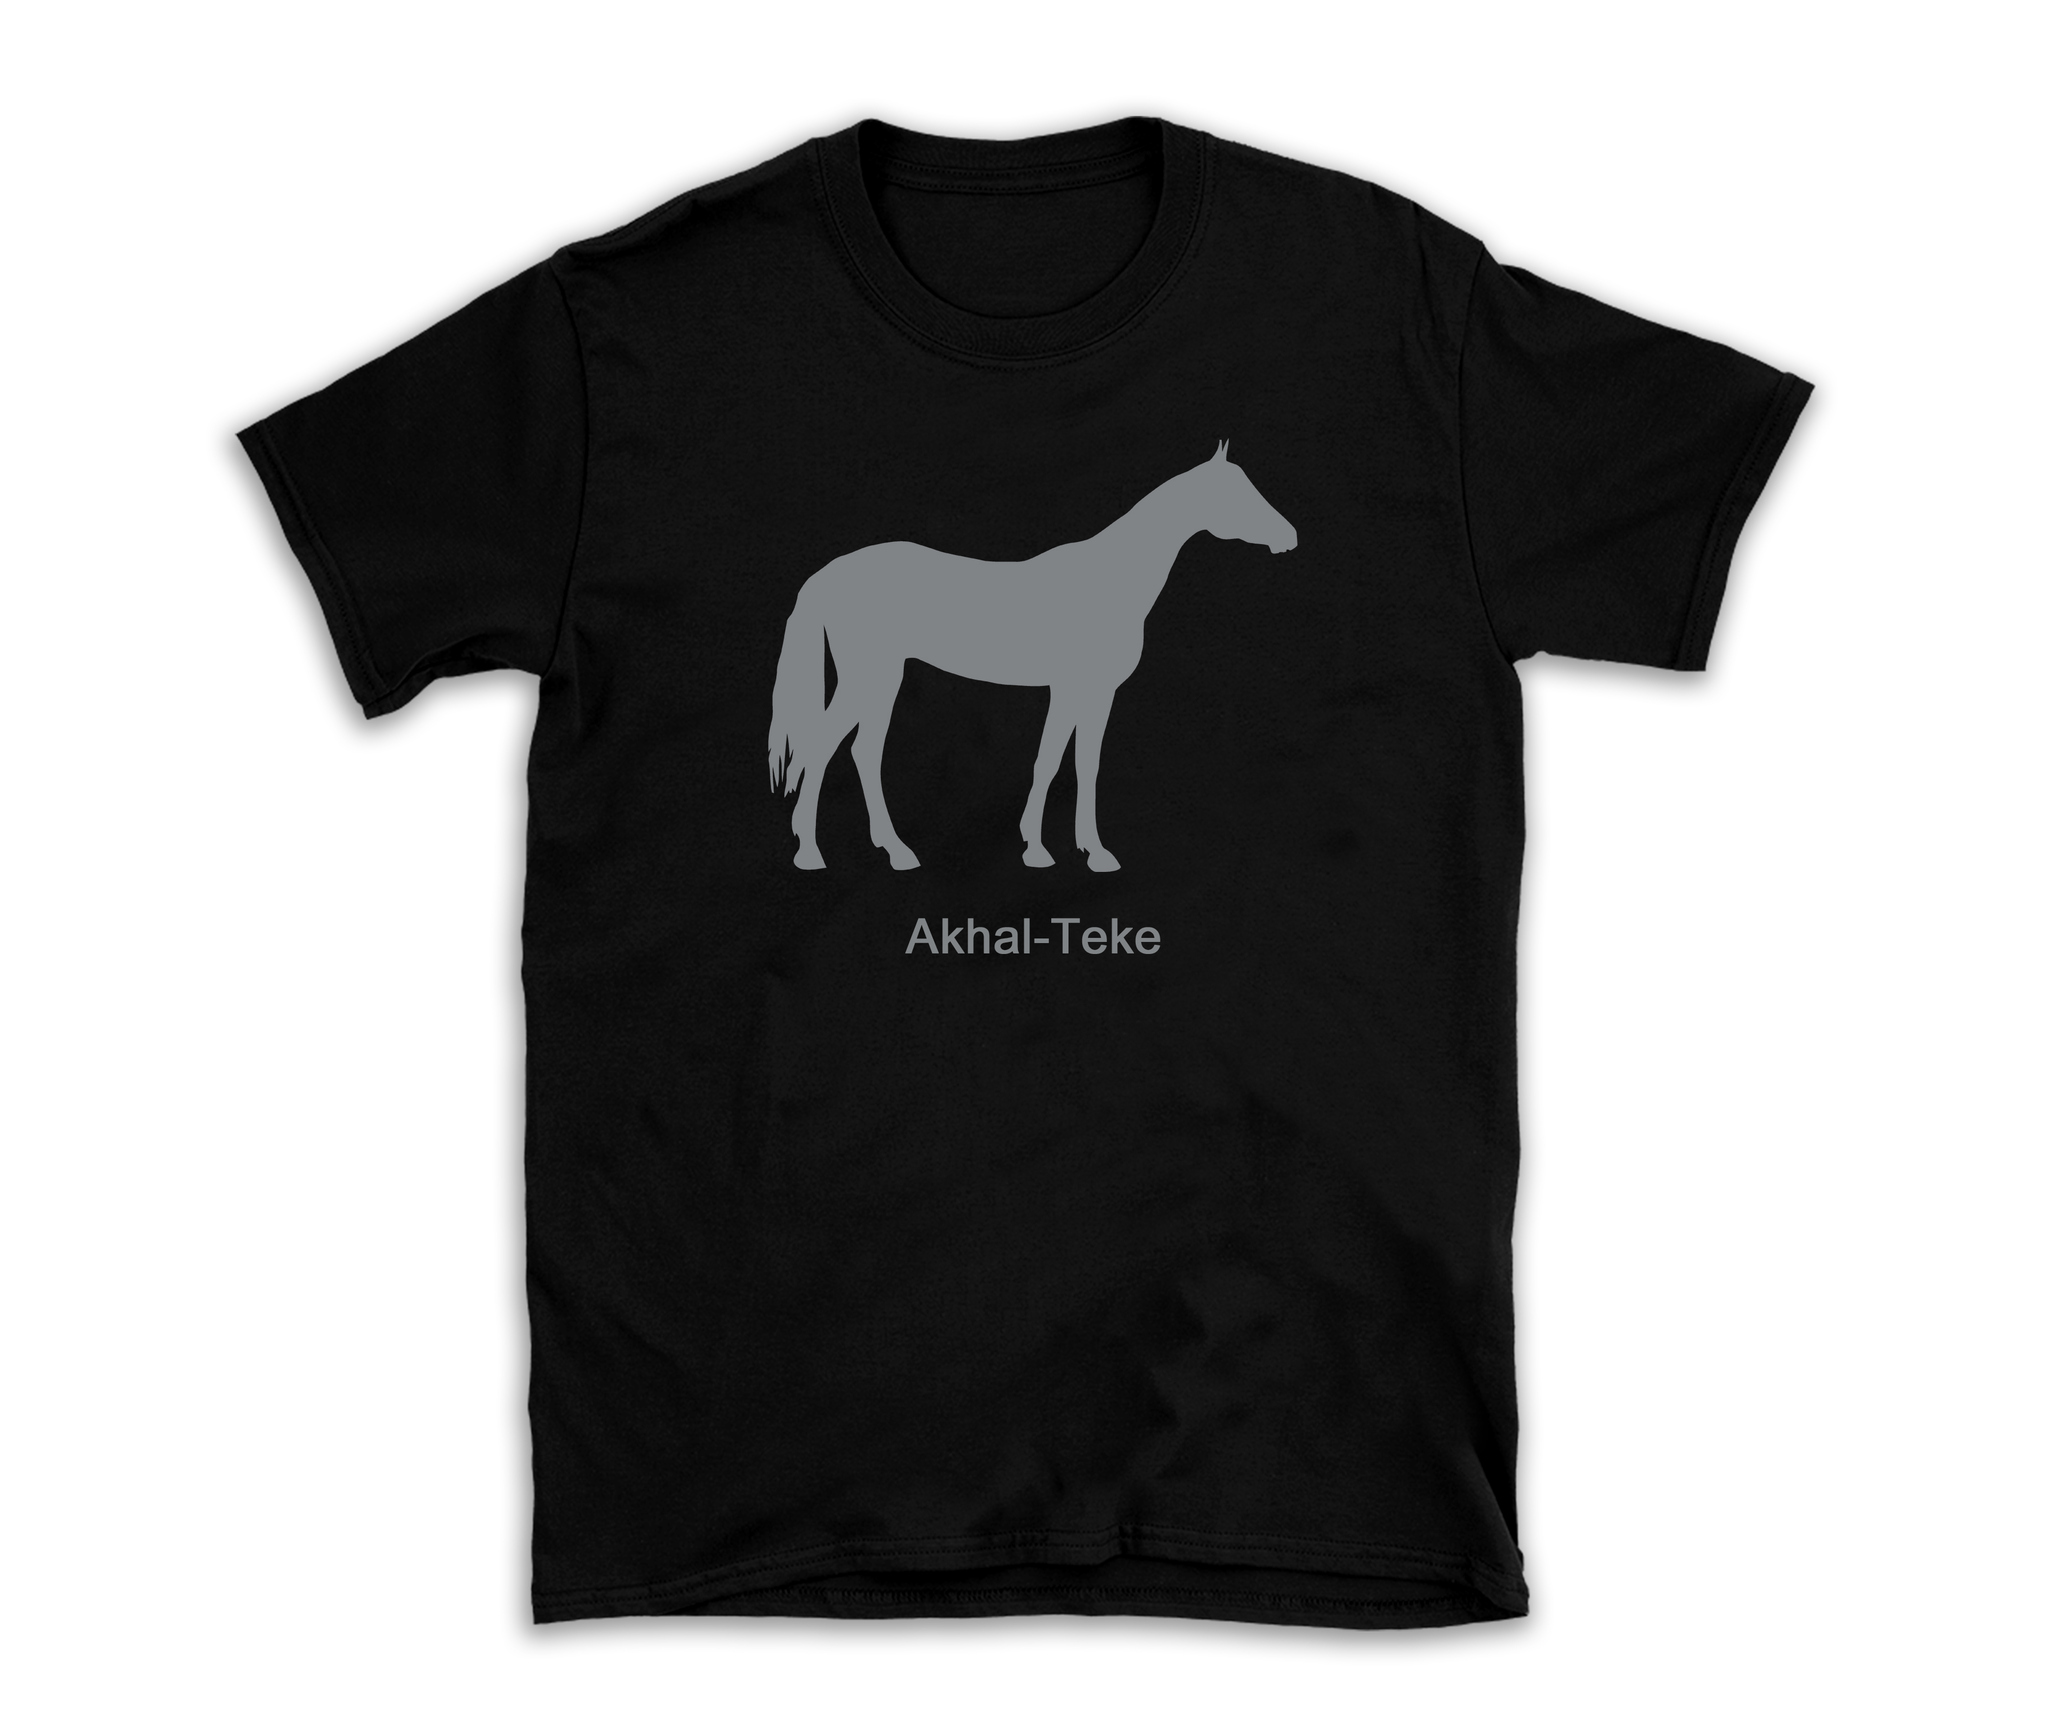 Achaltekeer Akhal-Teke Achal i Turkmenistan häst ras fullblodshäst fux brun svart skimmel gulanlag black tävlingshäst dressyr 17